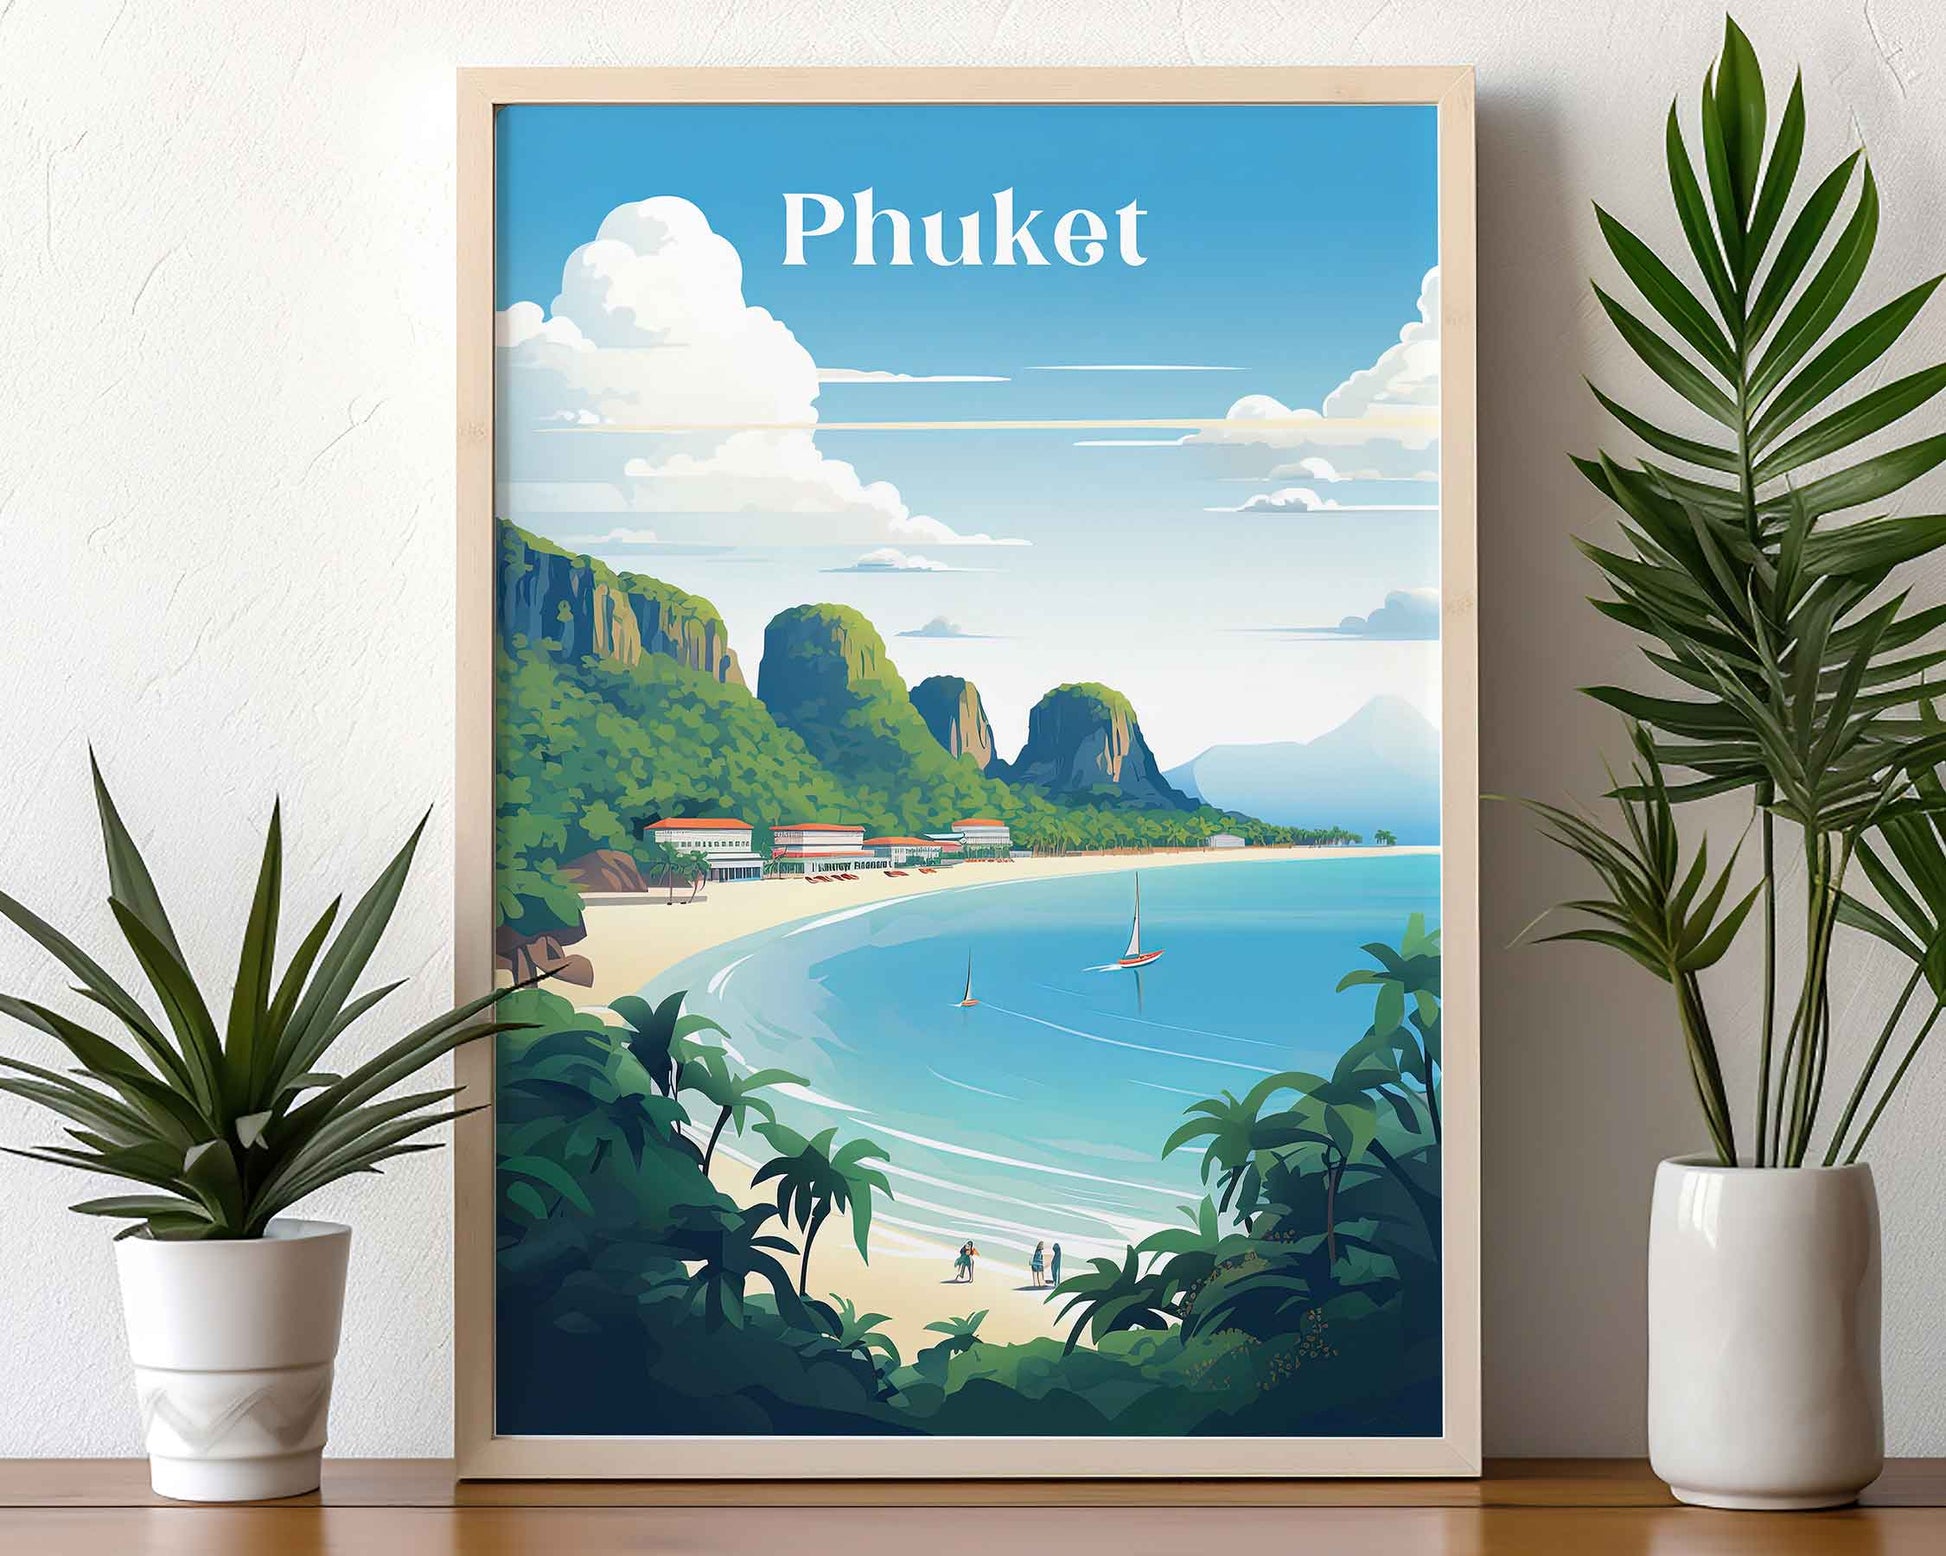 Framed Image of Phuket Thailand Travel Poster Wall Art Prints Illustration